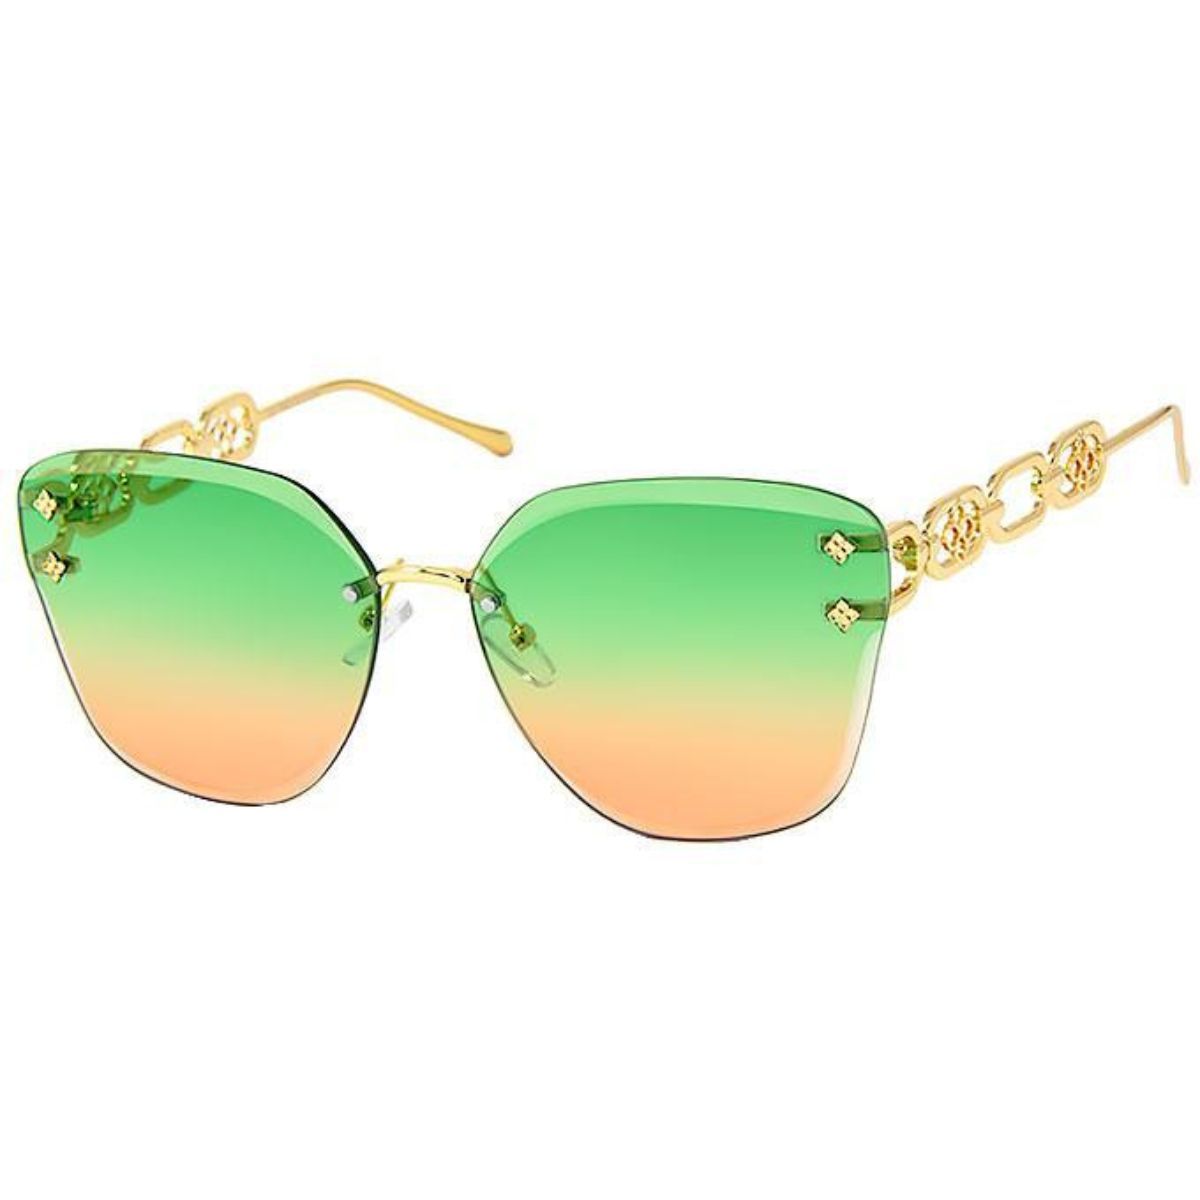 Green Clover Chain Arm Sunglasses